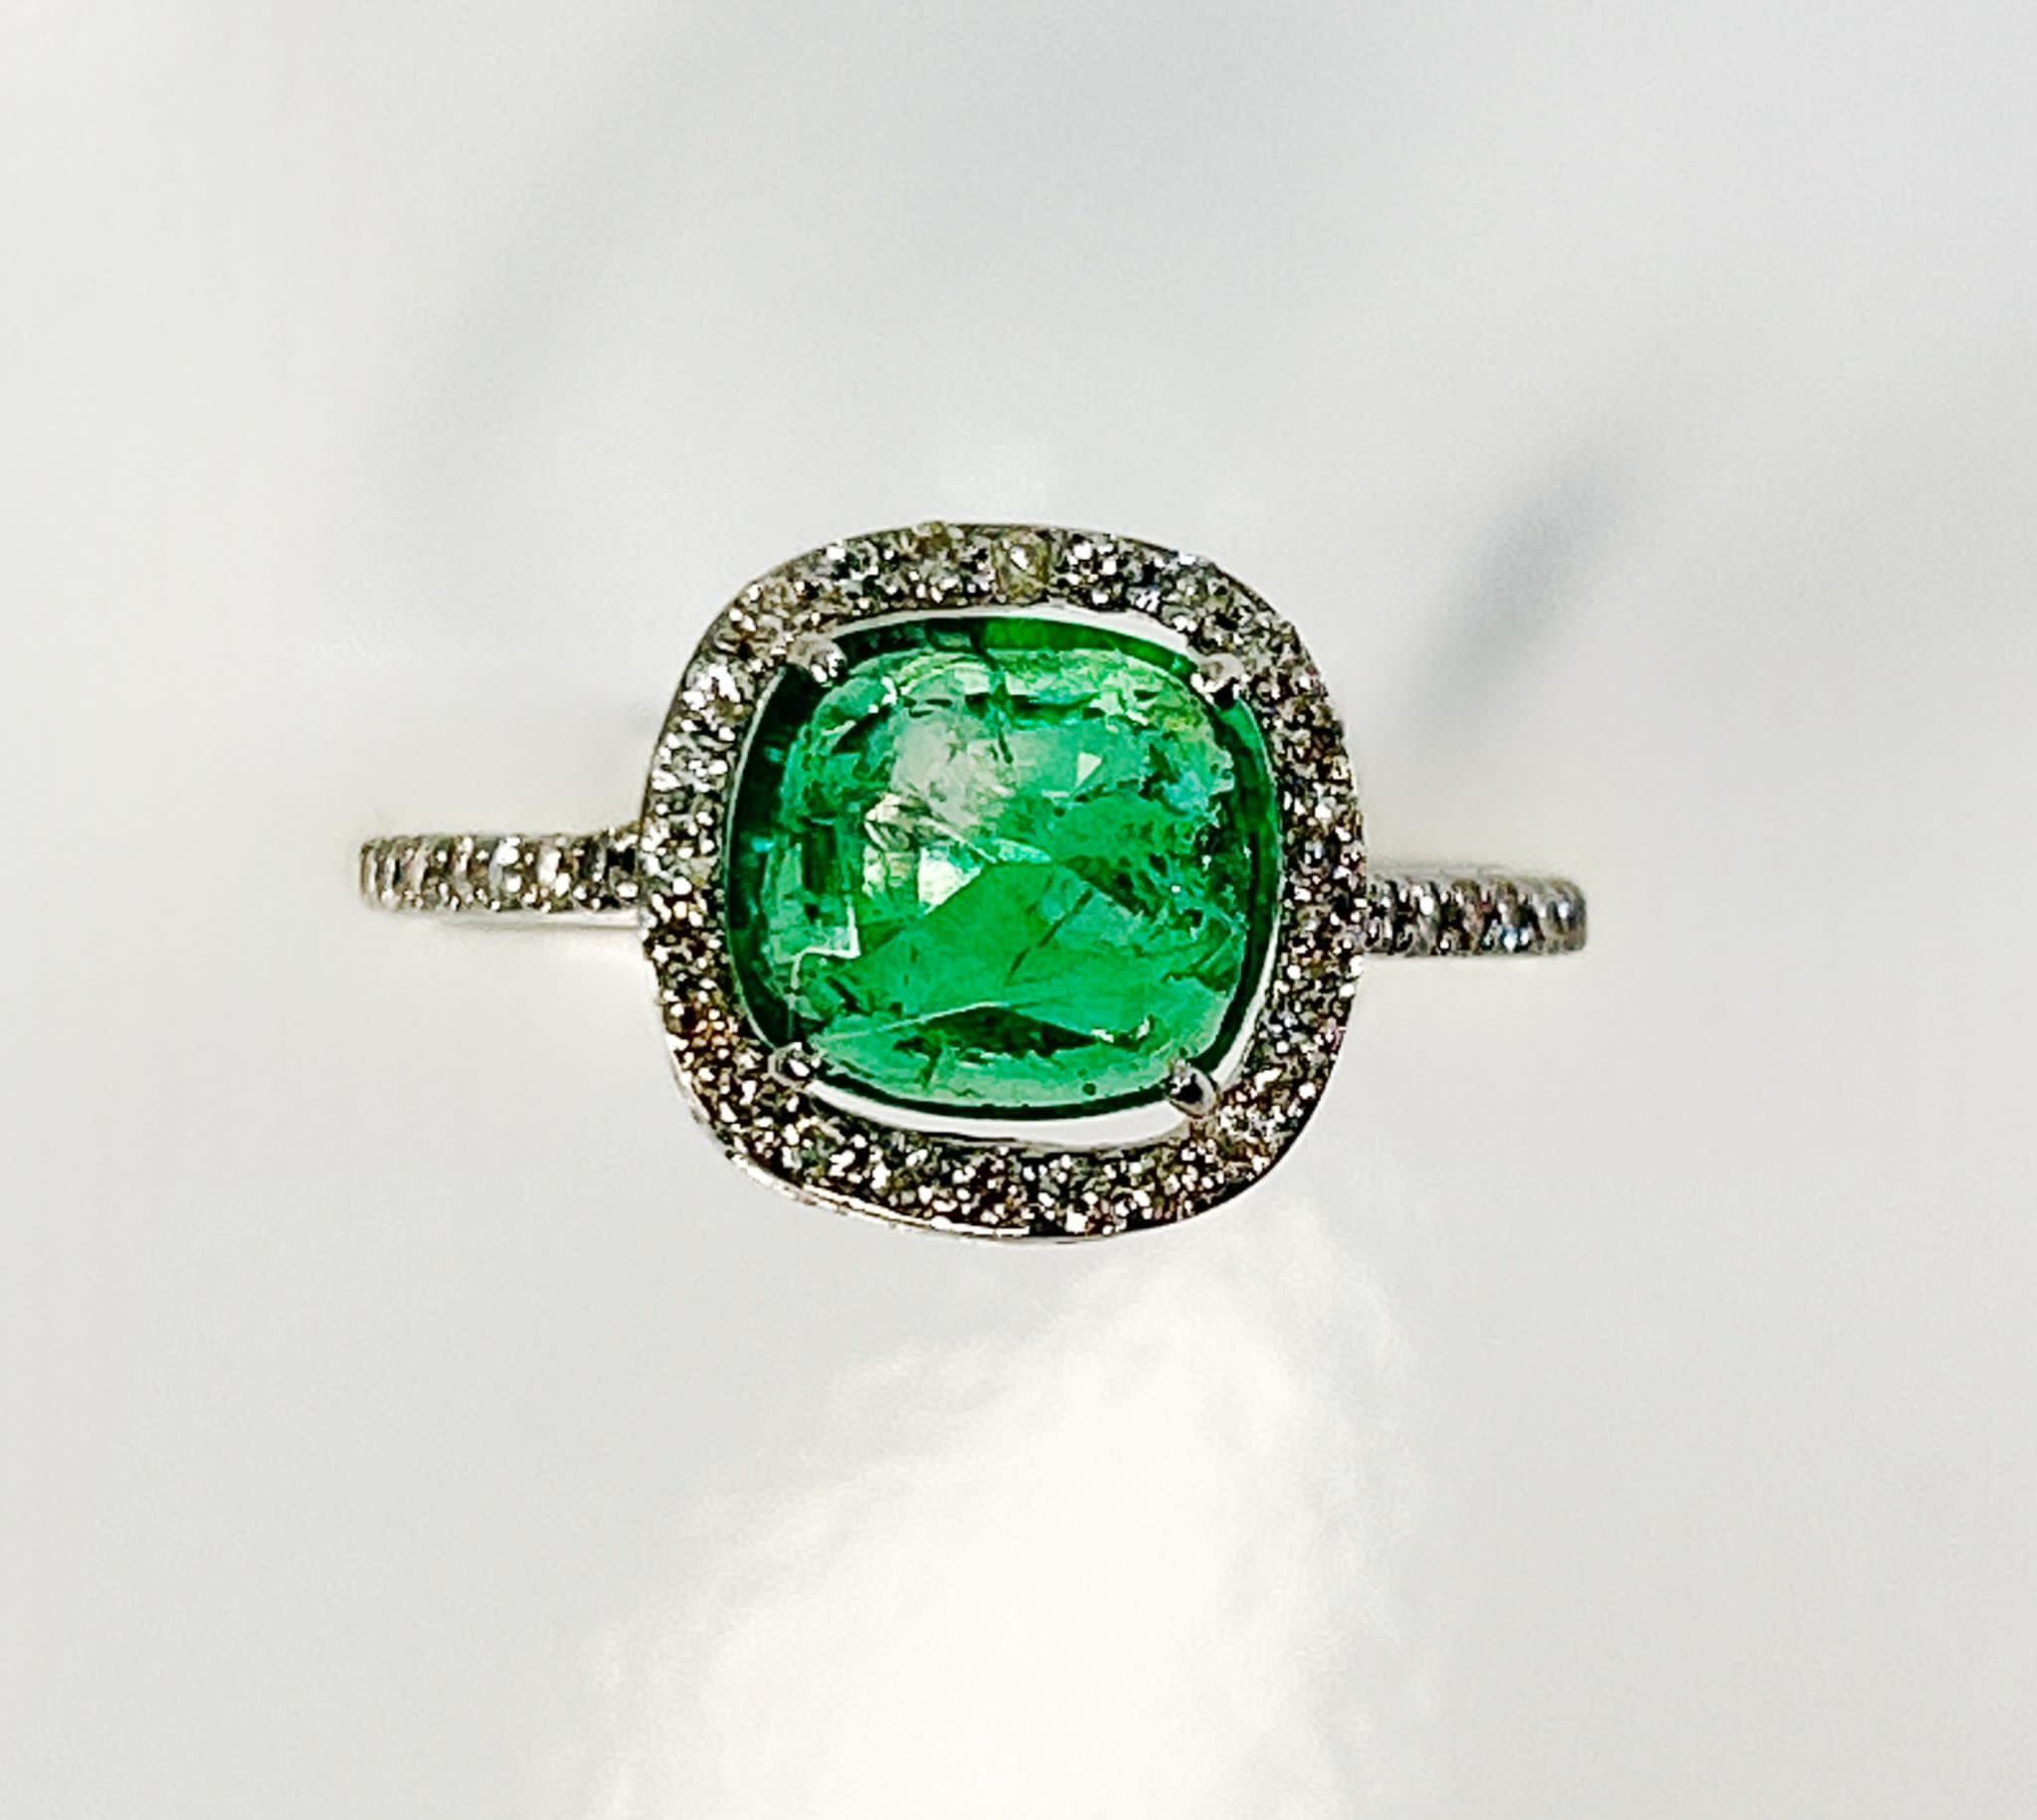 Beautiful 1.69 CT Natural Emerald Ring With Natural Diamonds & Platinum 950 - Image 2 of 5